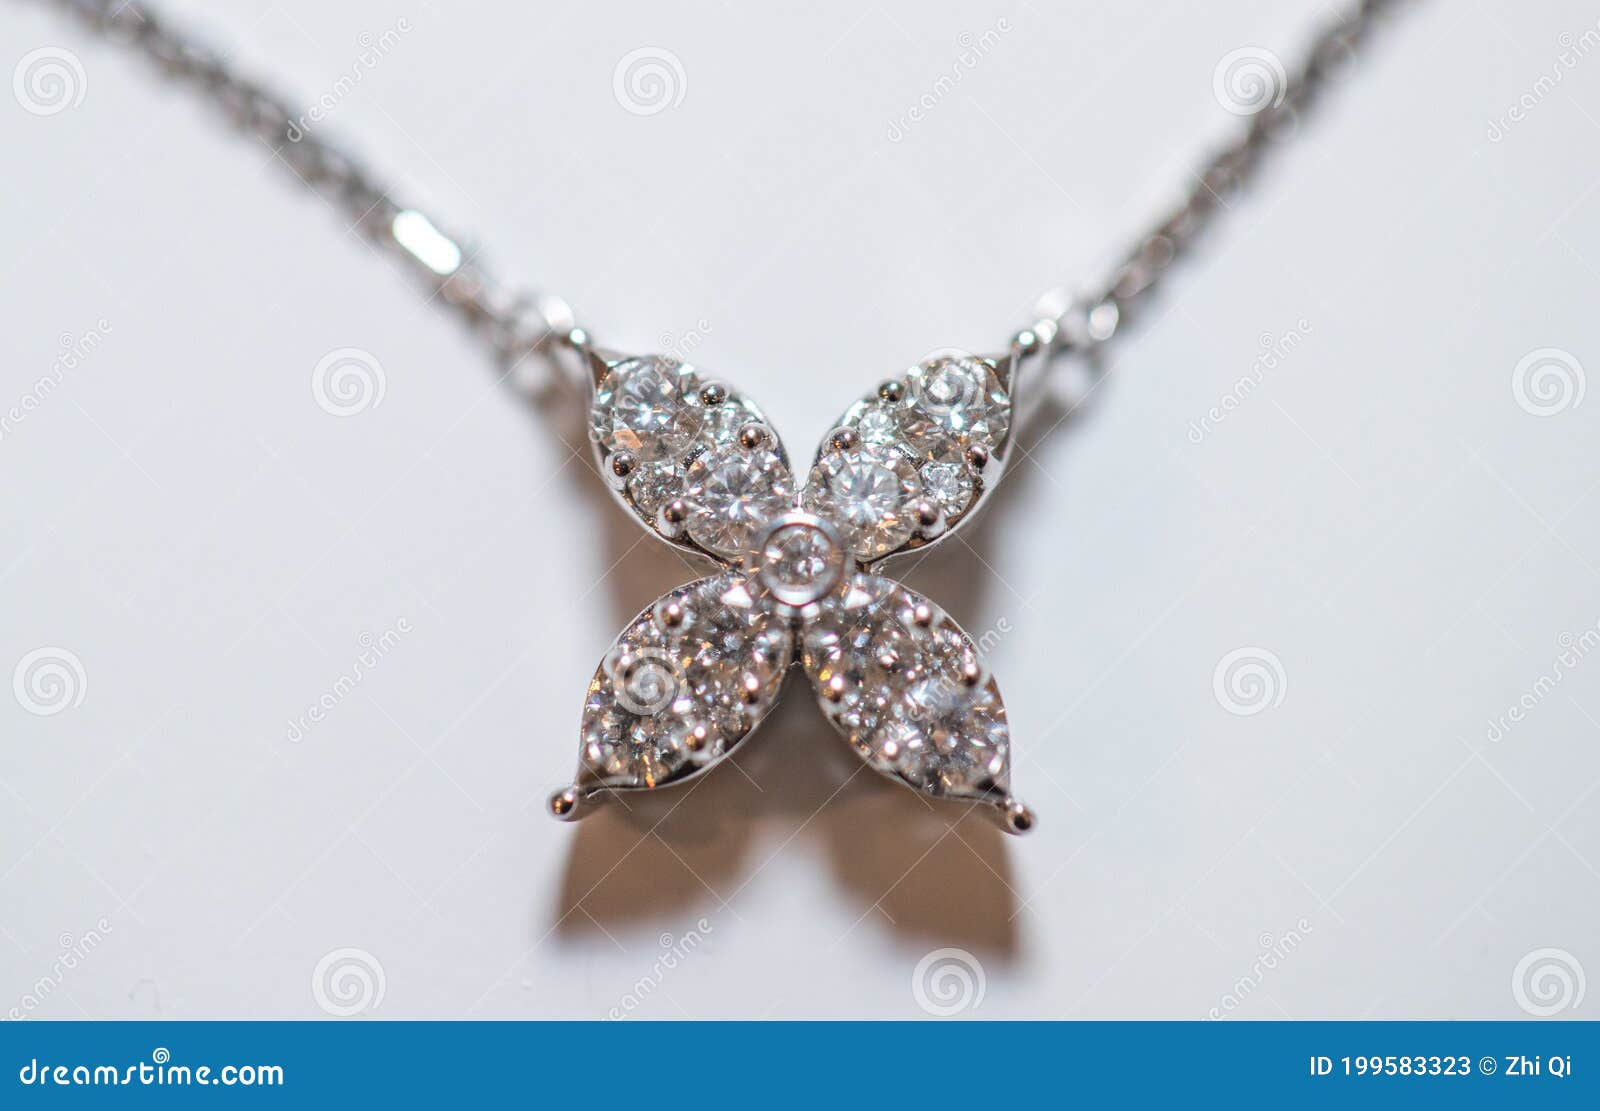 Four Leaf Clover diamond Necklace - Image Stock Photo - Alamy